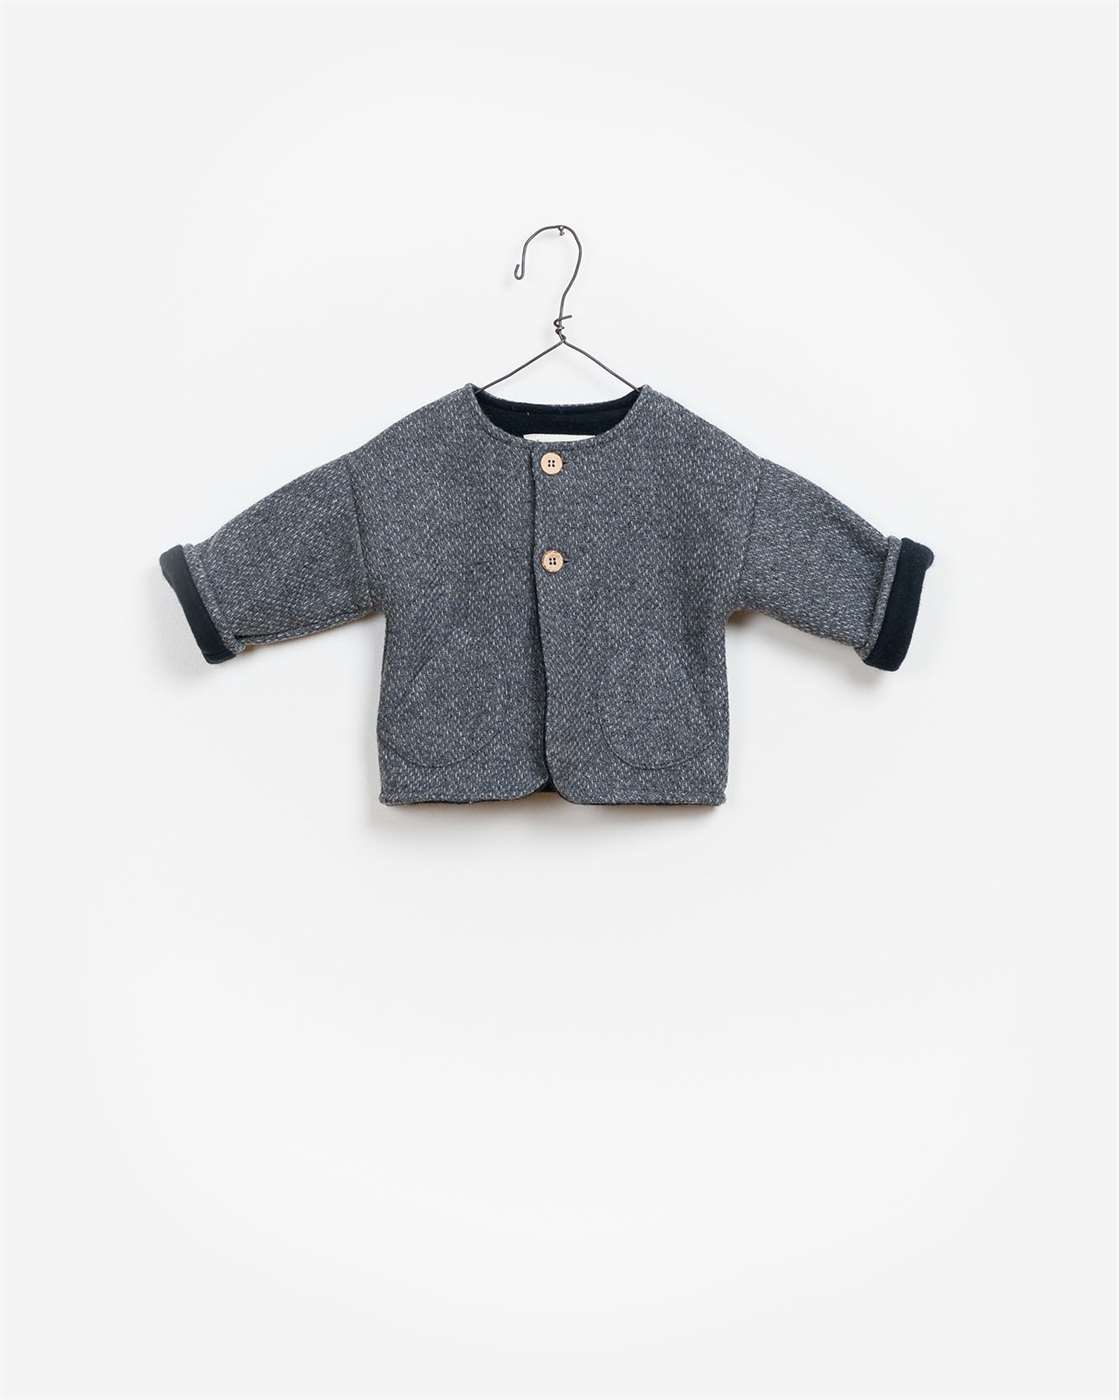 BeeBoo|BeeBoo PlayUp vêtements bébé baby clothes manteau Fazenda coat gris grey